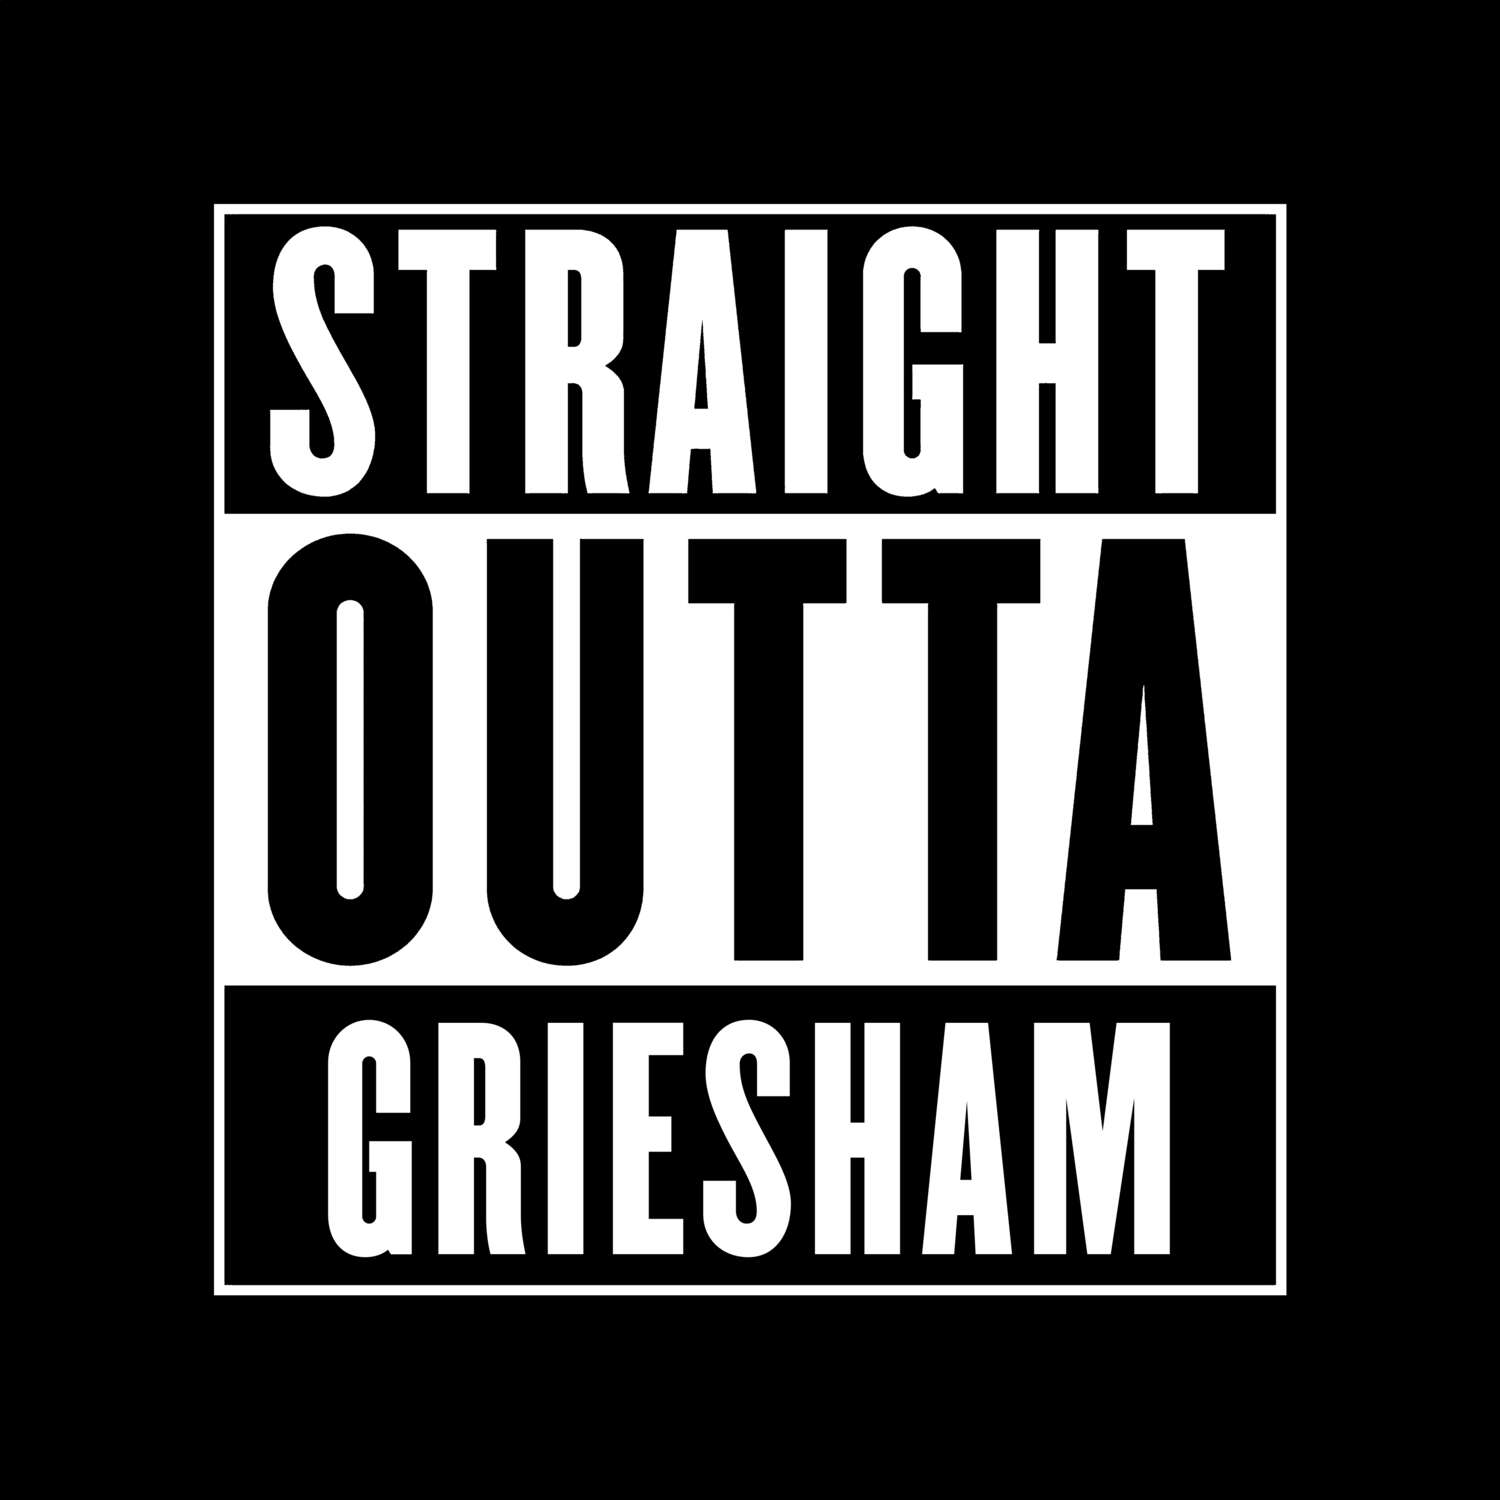 Griesham T-Shirt »Straight Outta«